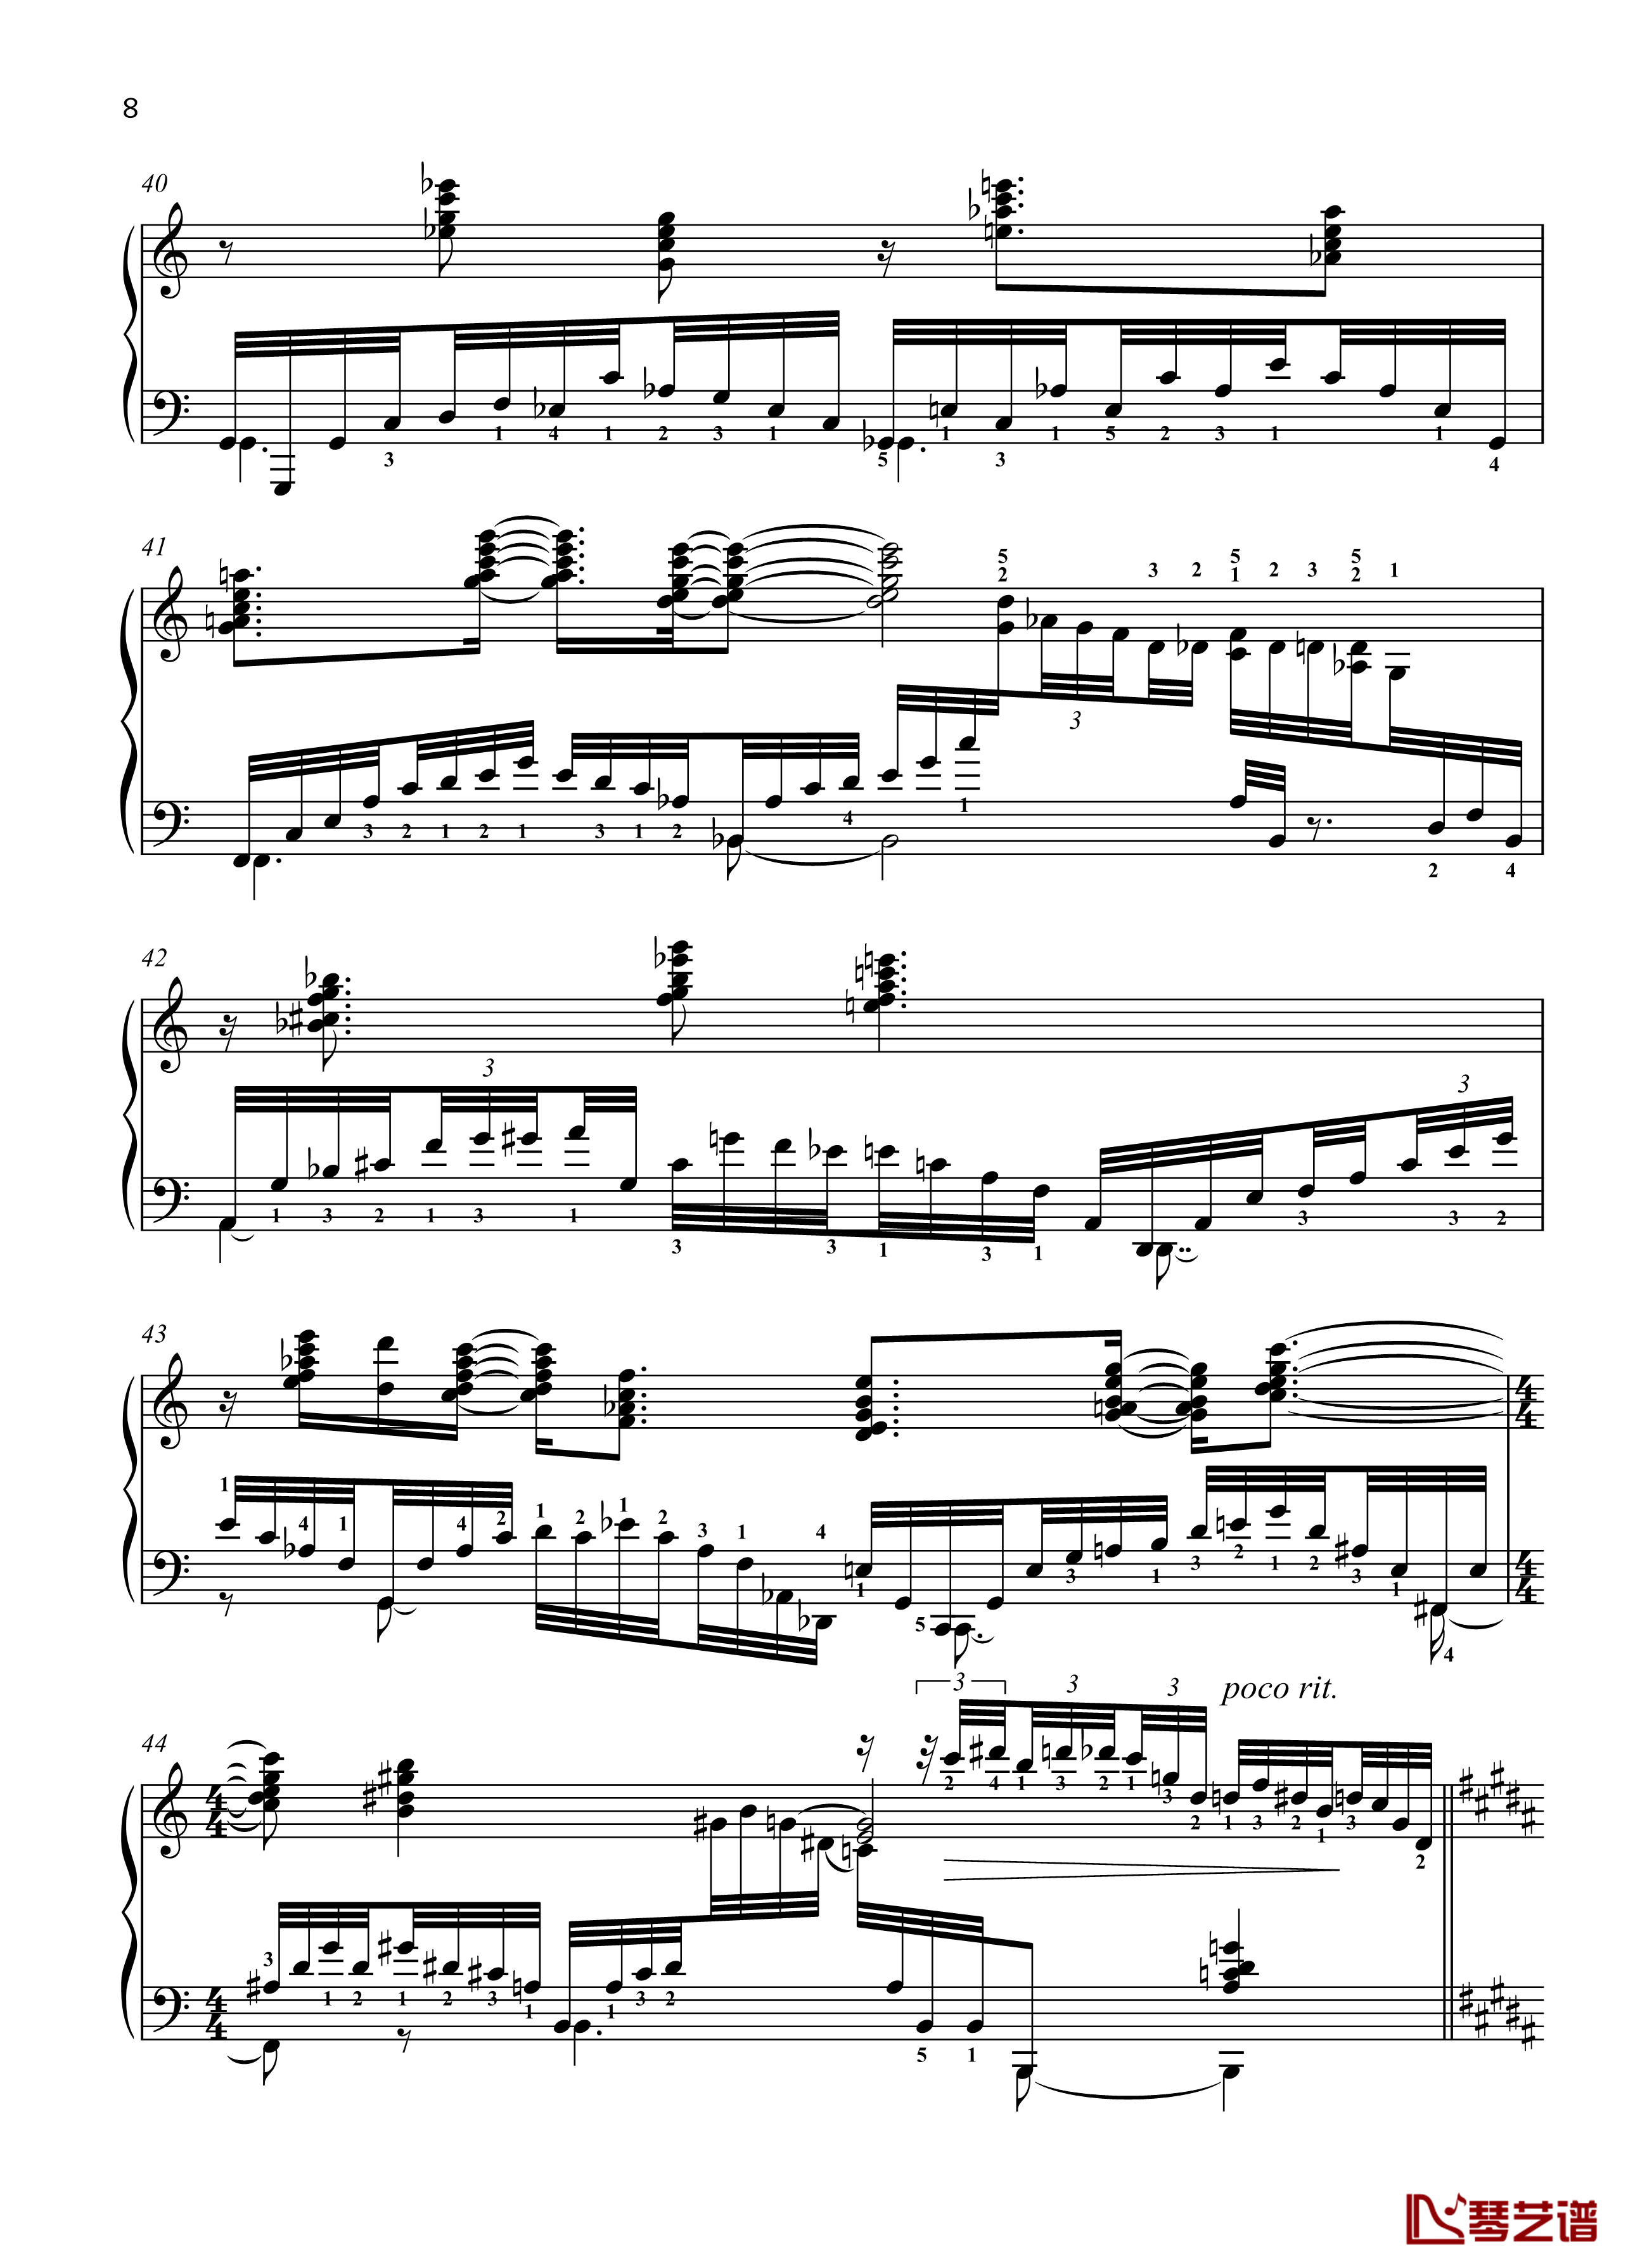 No. 4. Reminiscence钢琴谱-带指法-八首音乐会练习曲  Eight Concert ?tudes Op 40 - -爵士-尼古拉·凯帕斯汀8